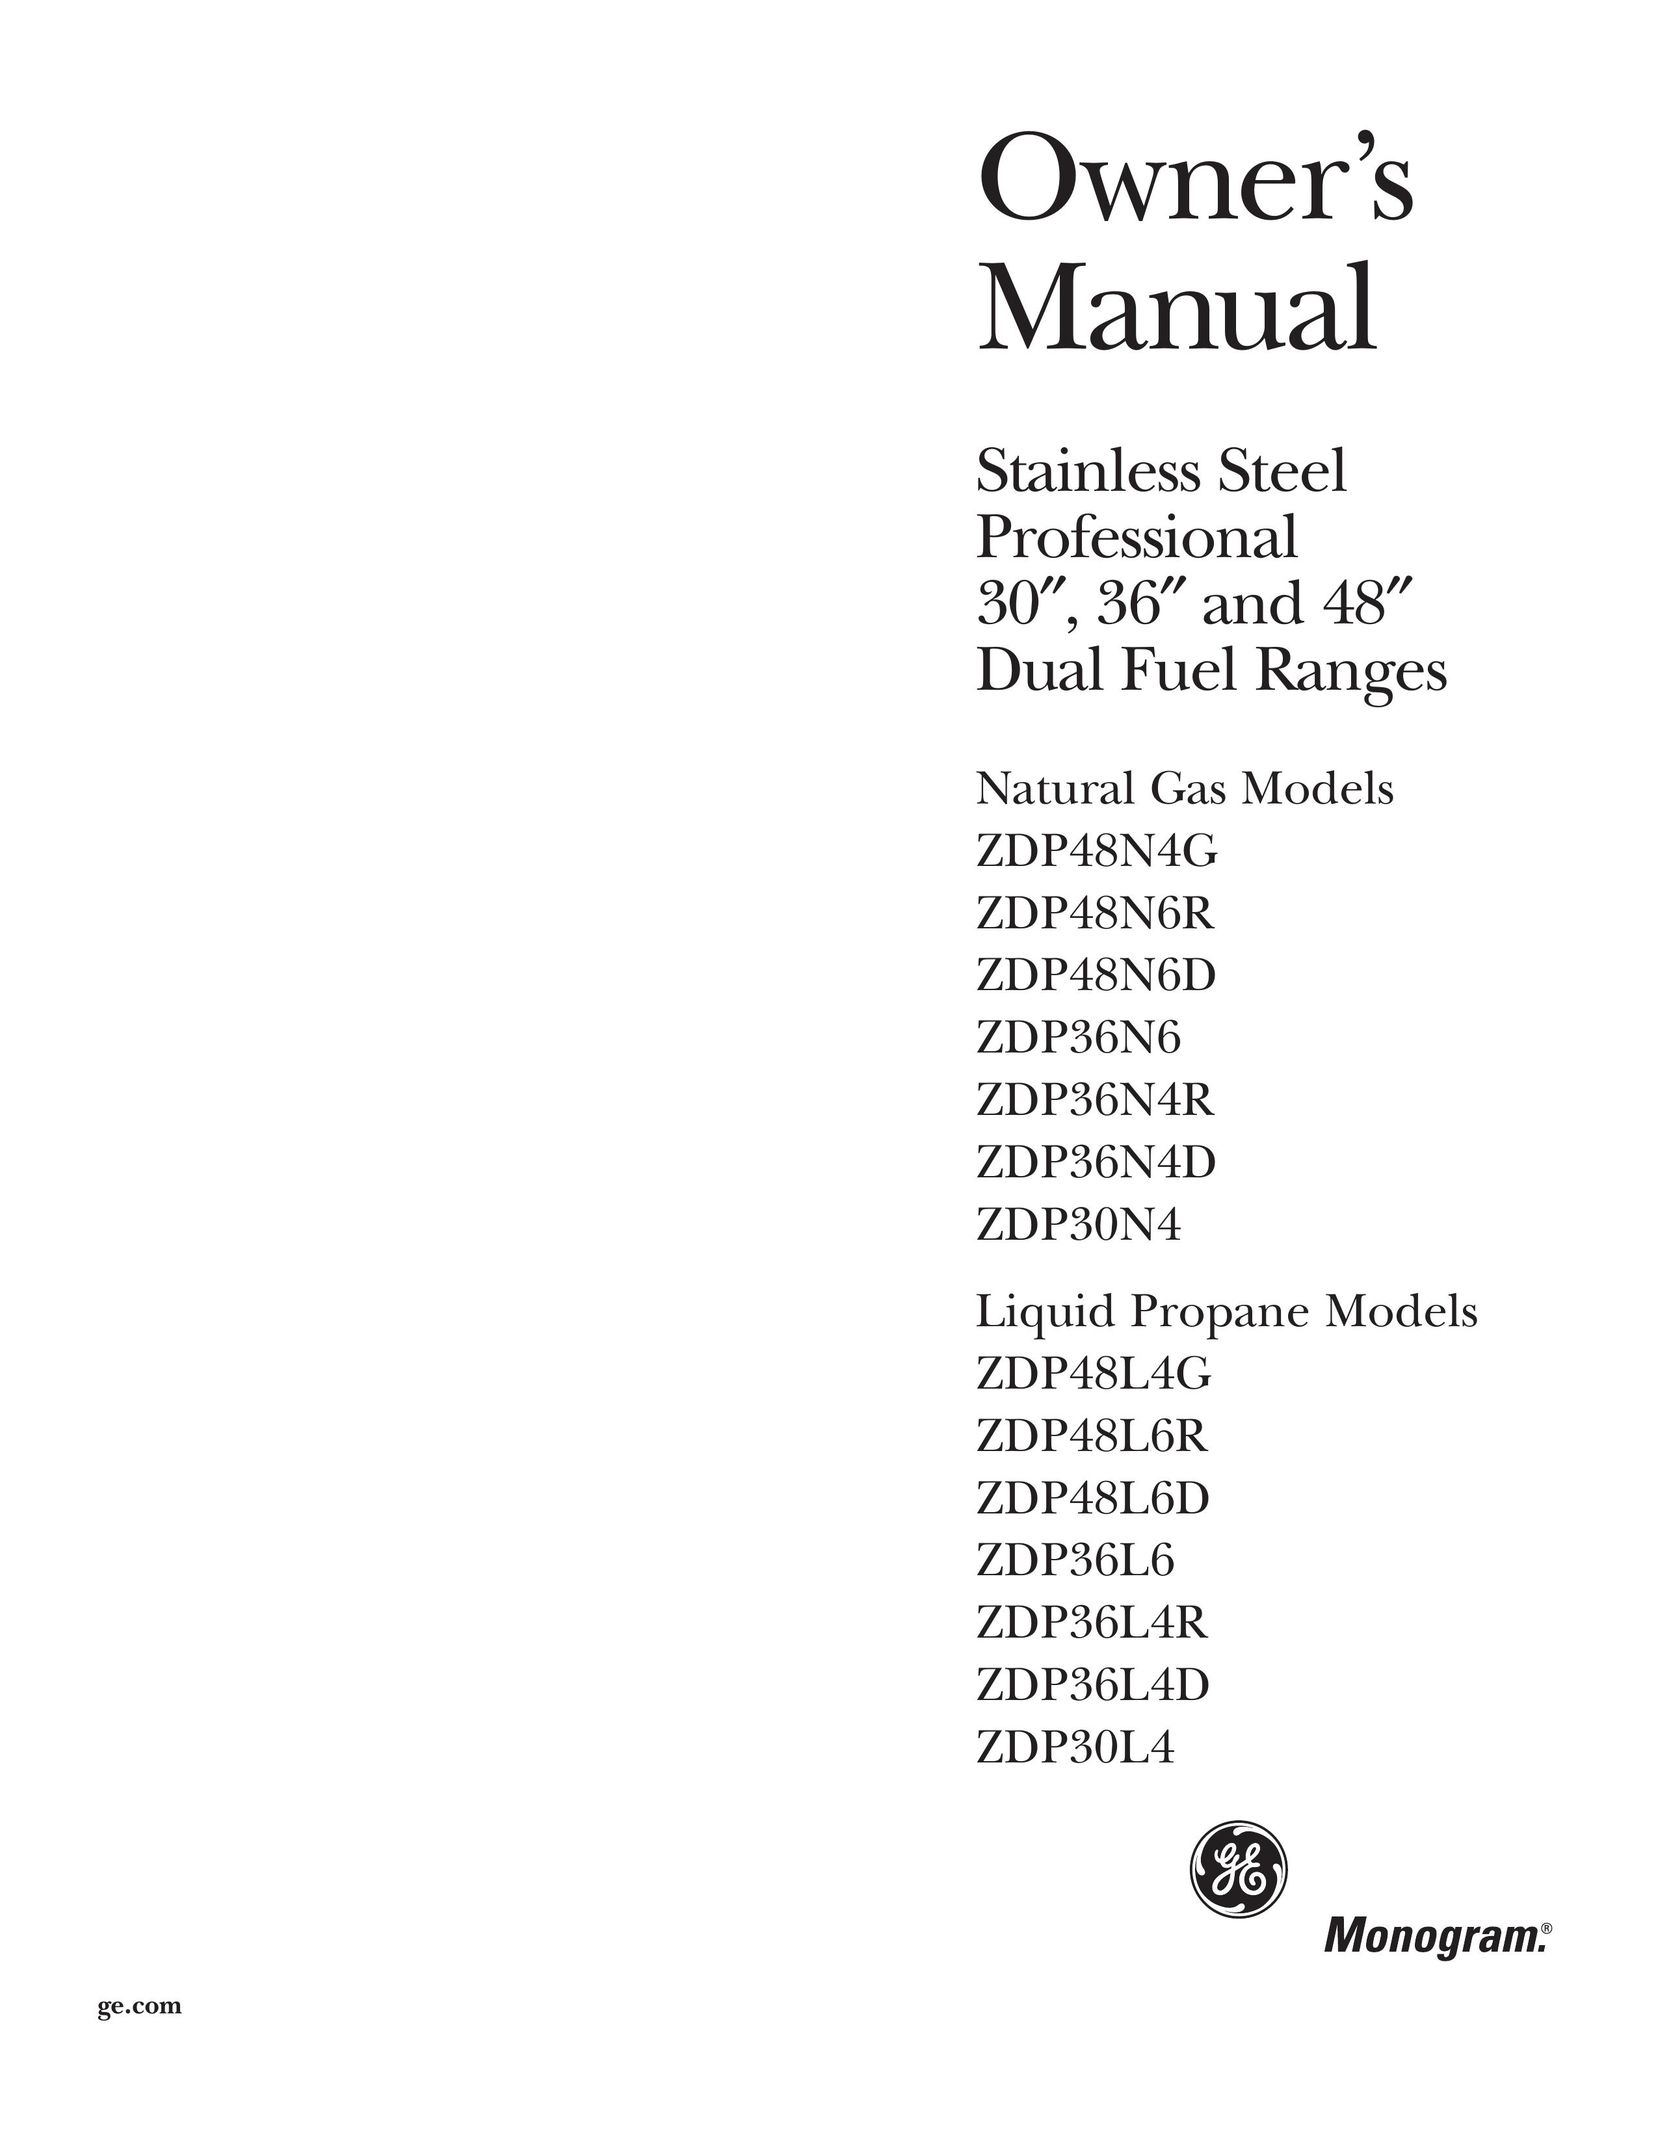 GE Monogram ZDP36L4D Range User Manual